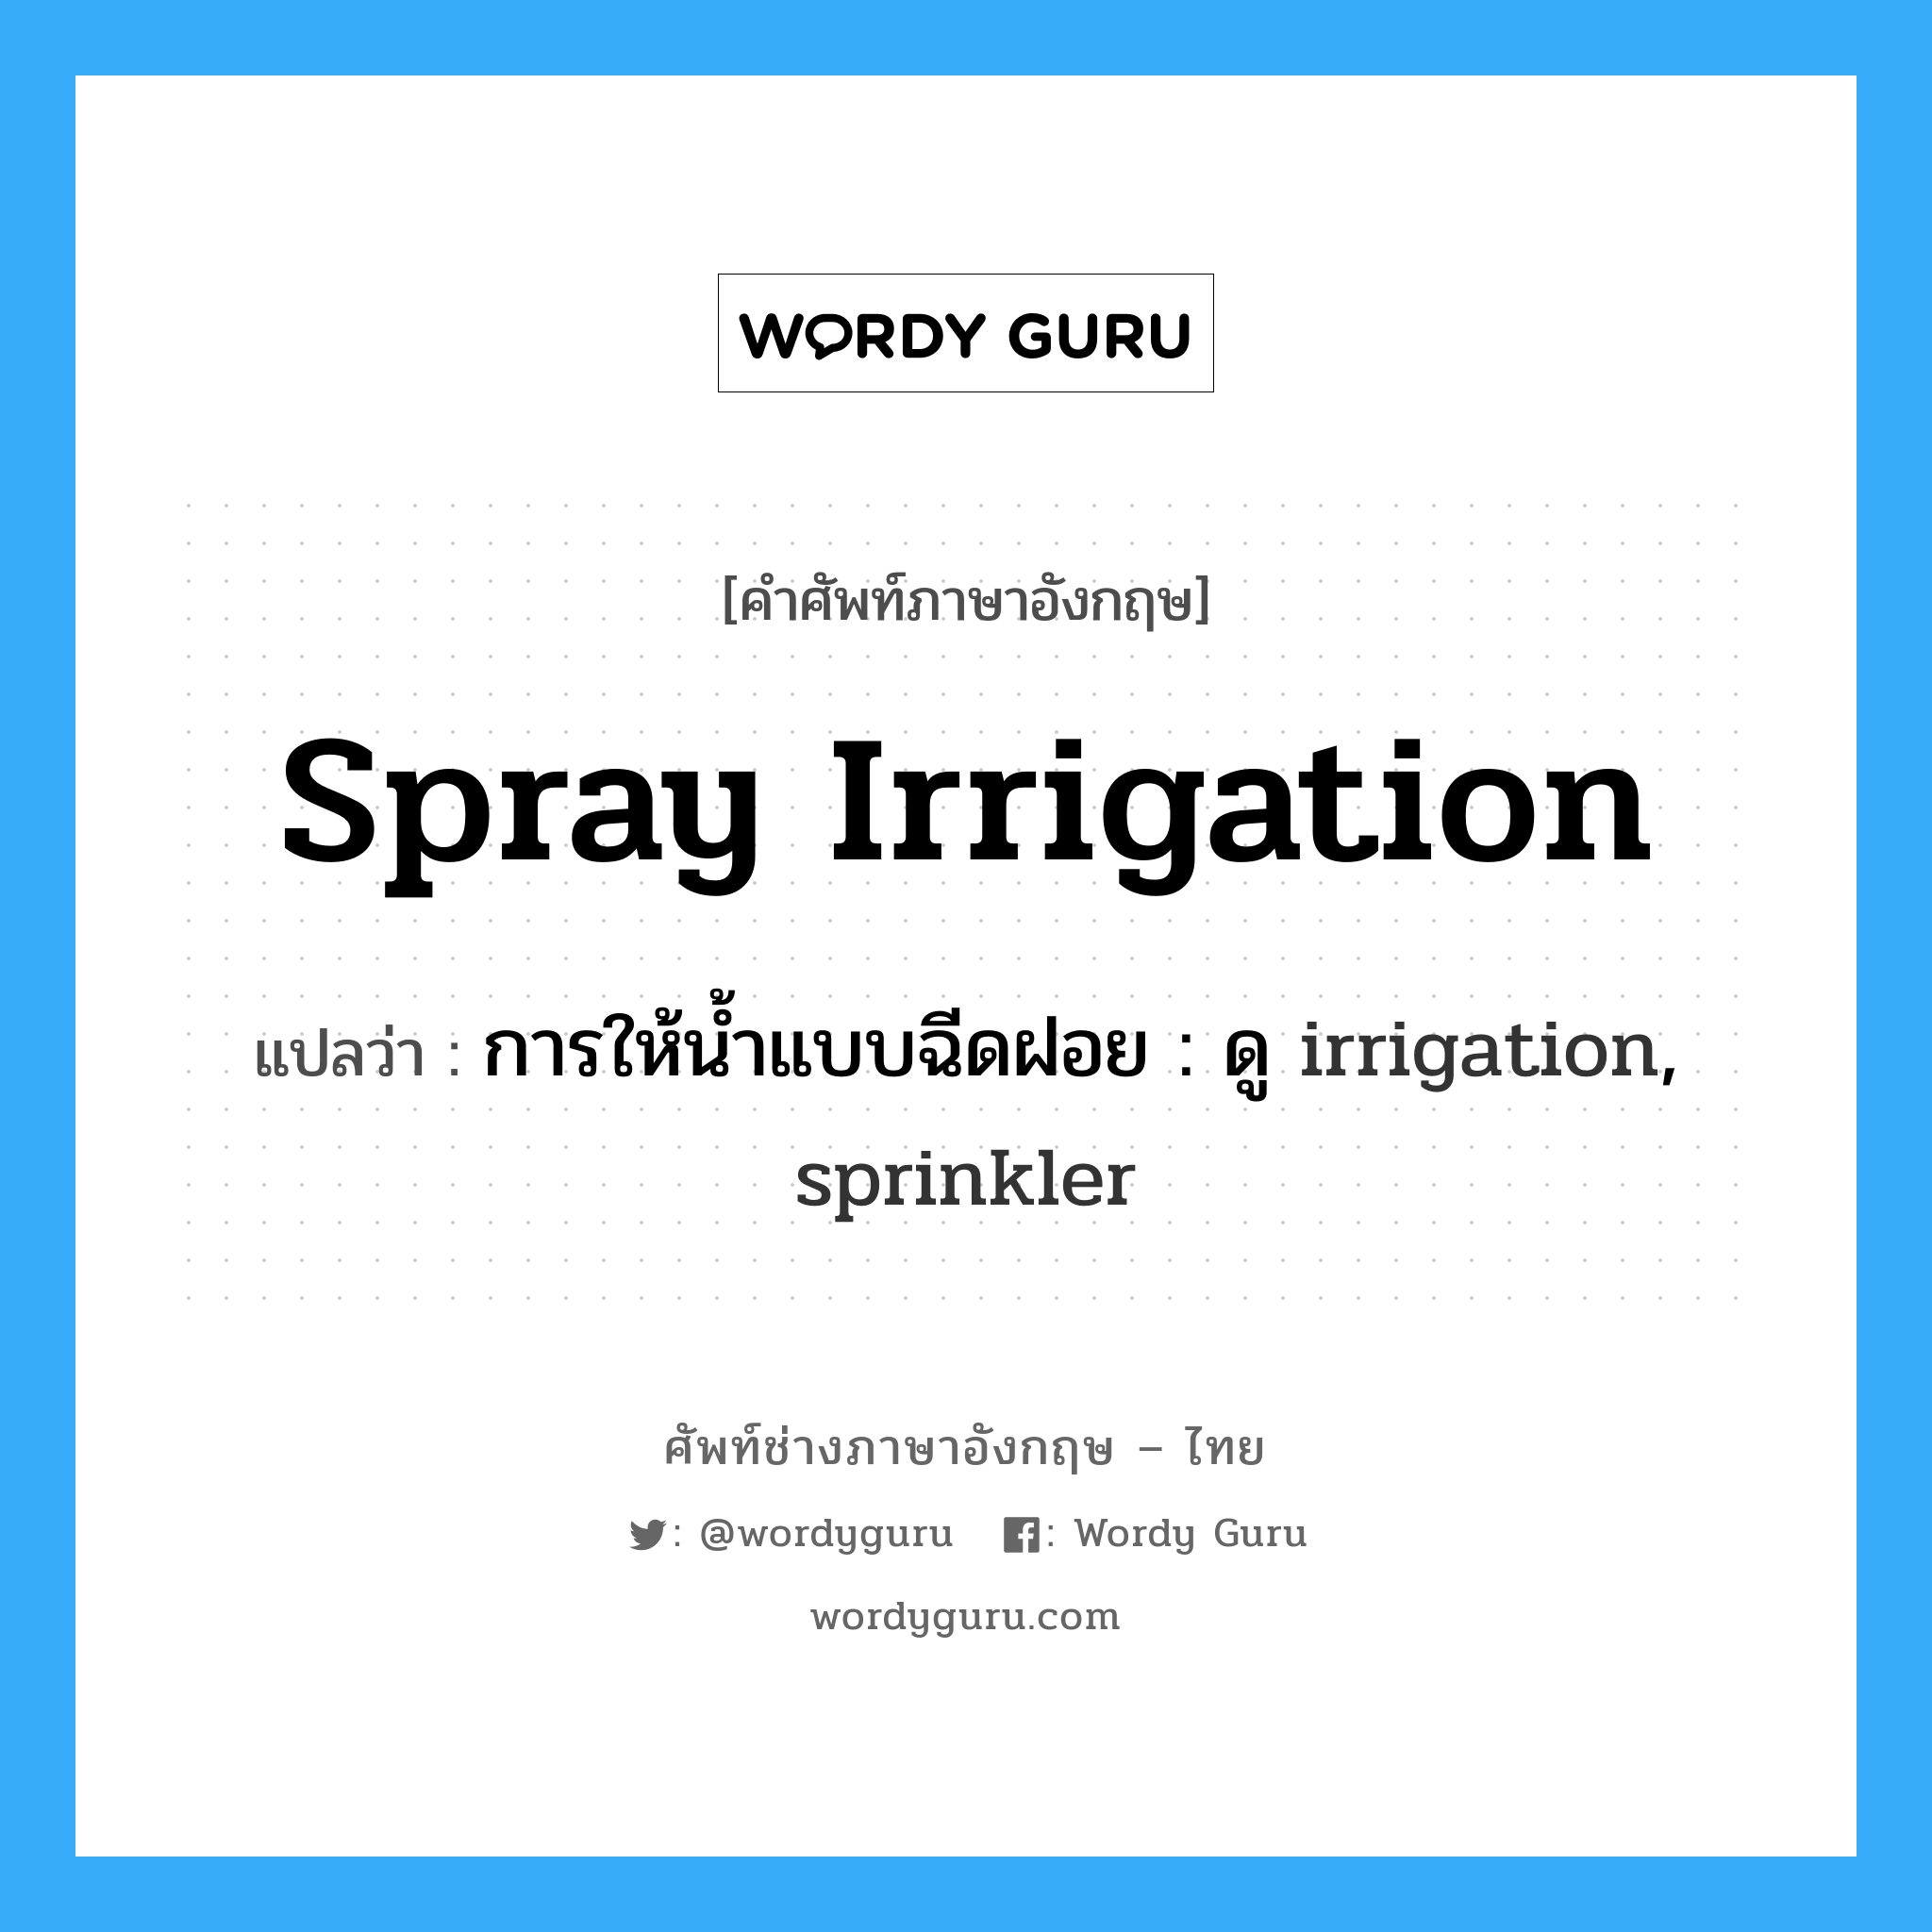 spray irrigation แปลว่า?, คำศัพท์ช่างภาษาอังกฤษ - ไทย spray irrigation คำศัพท์ภาษาอังกฤษ spray irrigation แปลว่า การให้น้ำแบบฉีดฝอย : ดู irrigation, sprinkler